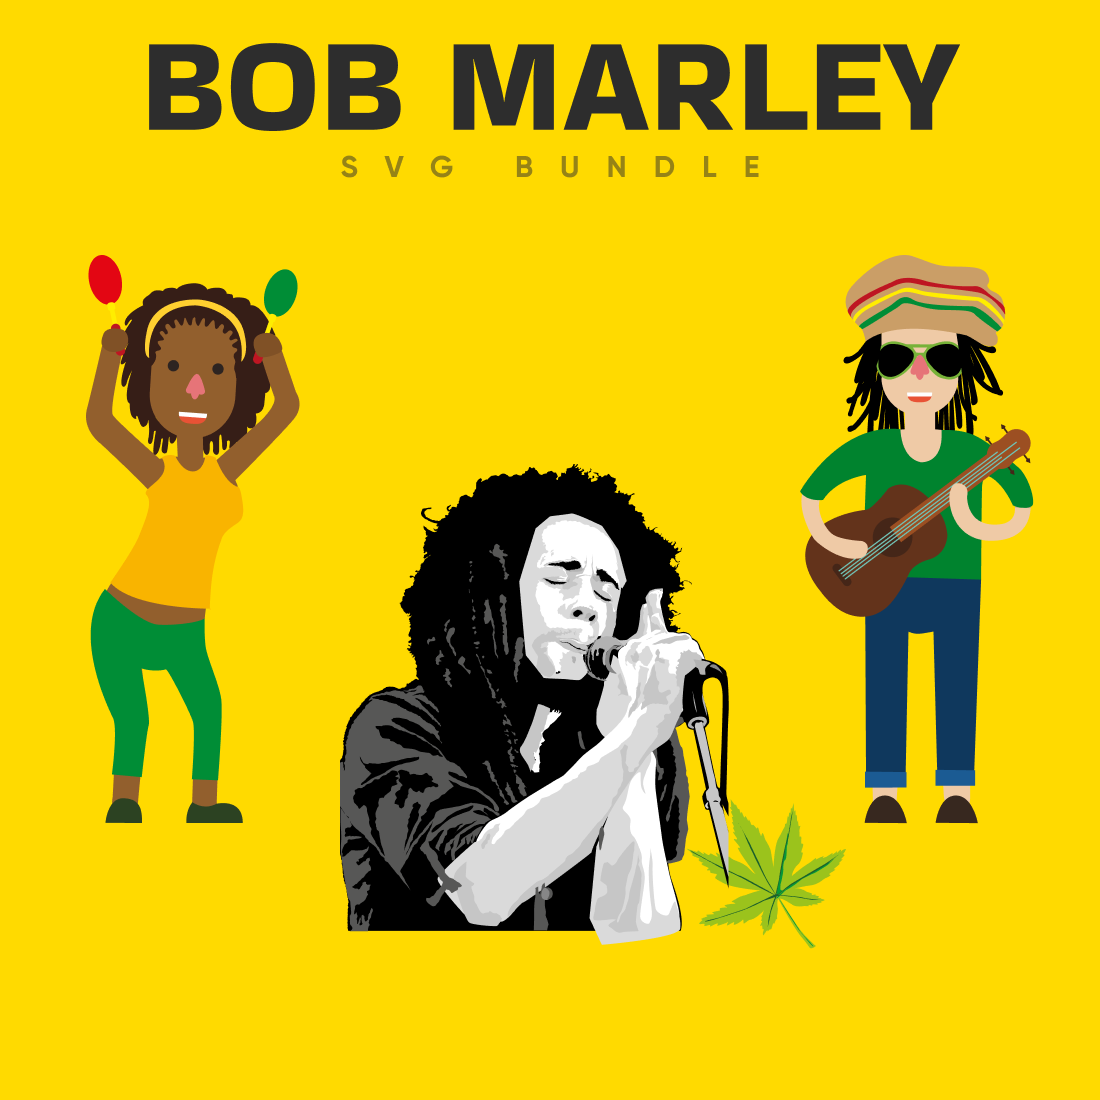 Bob Marley SVG preview.